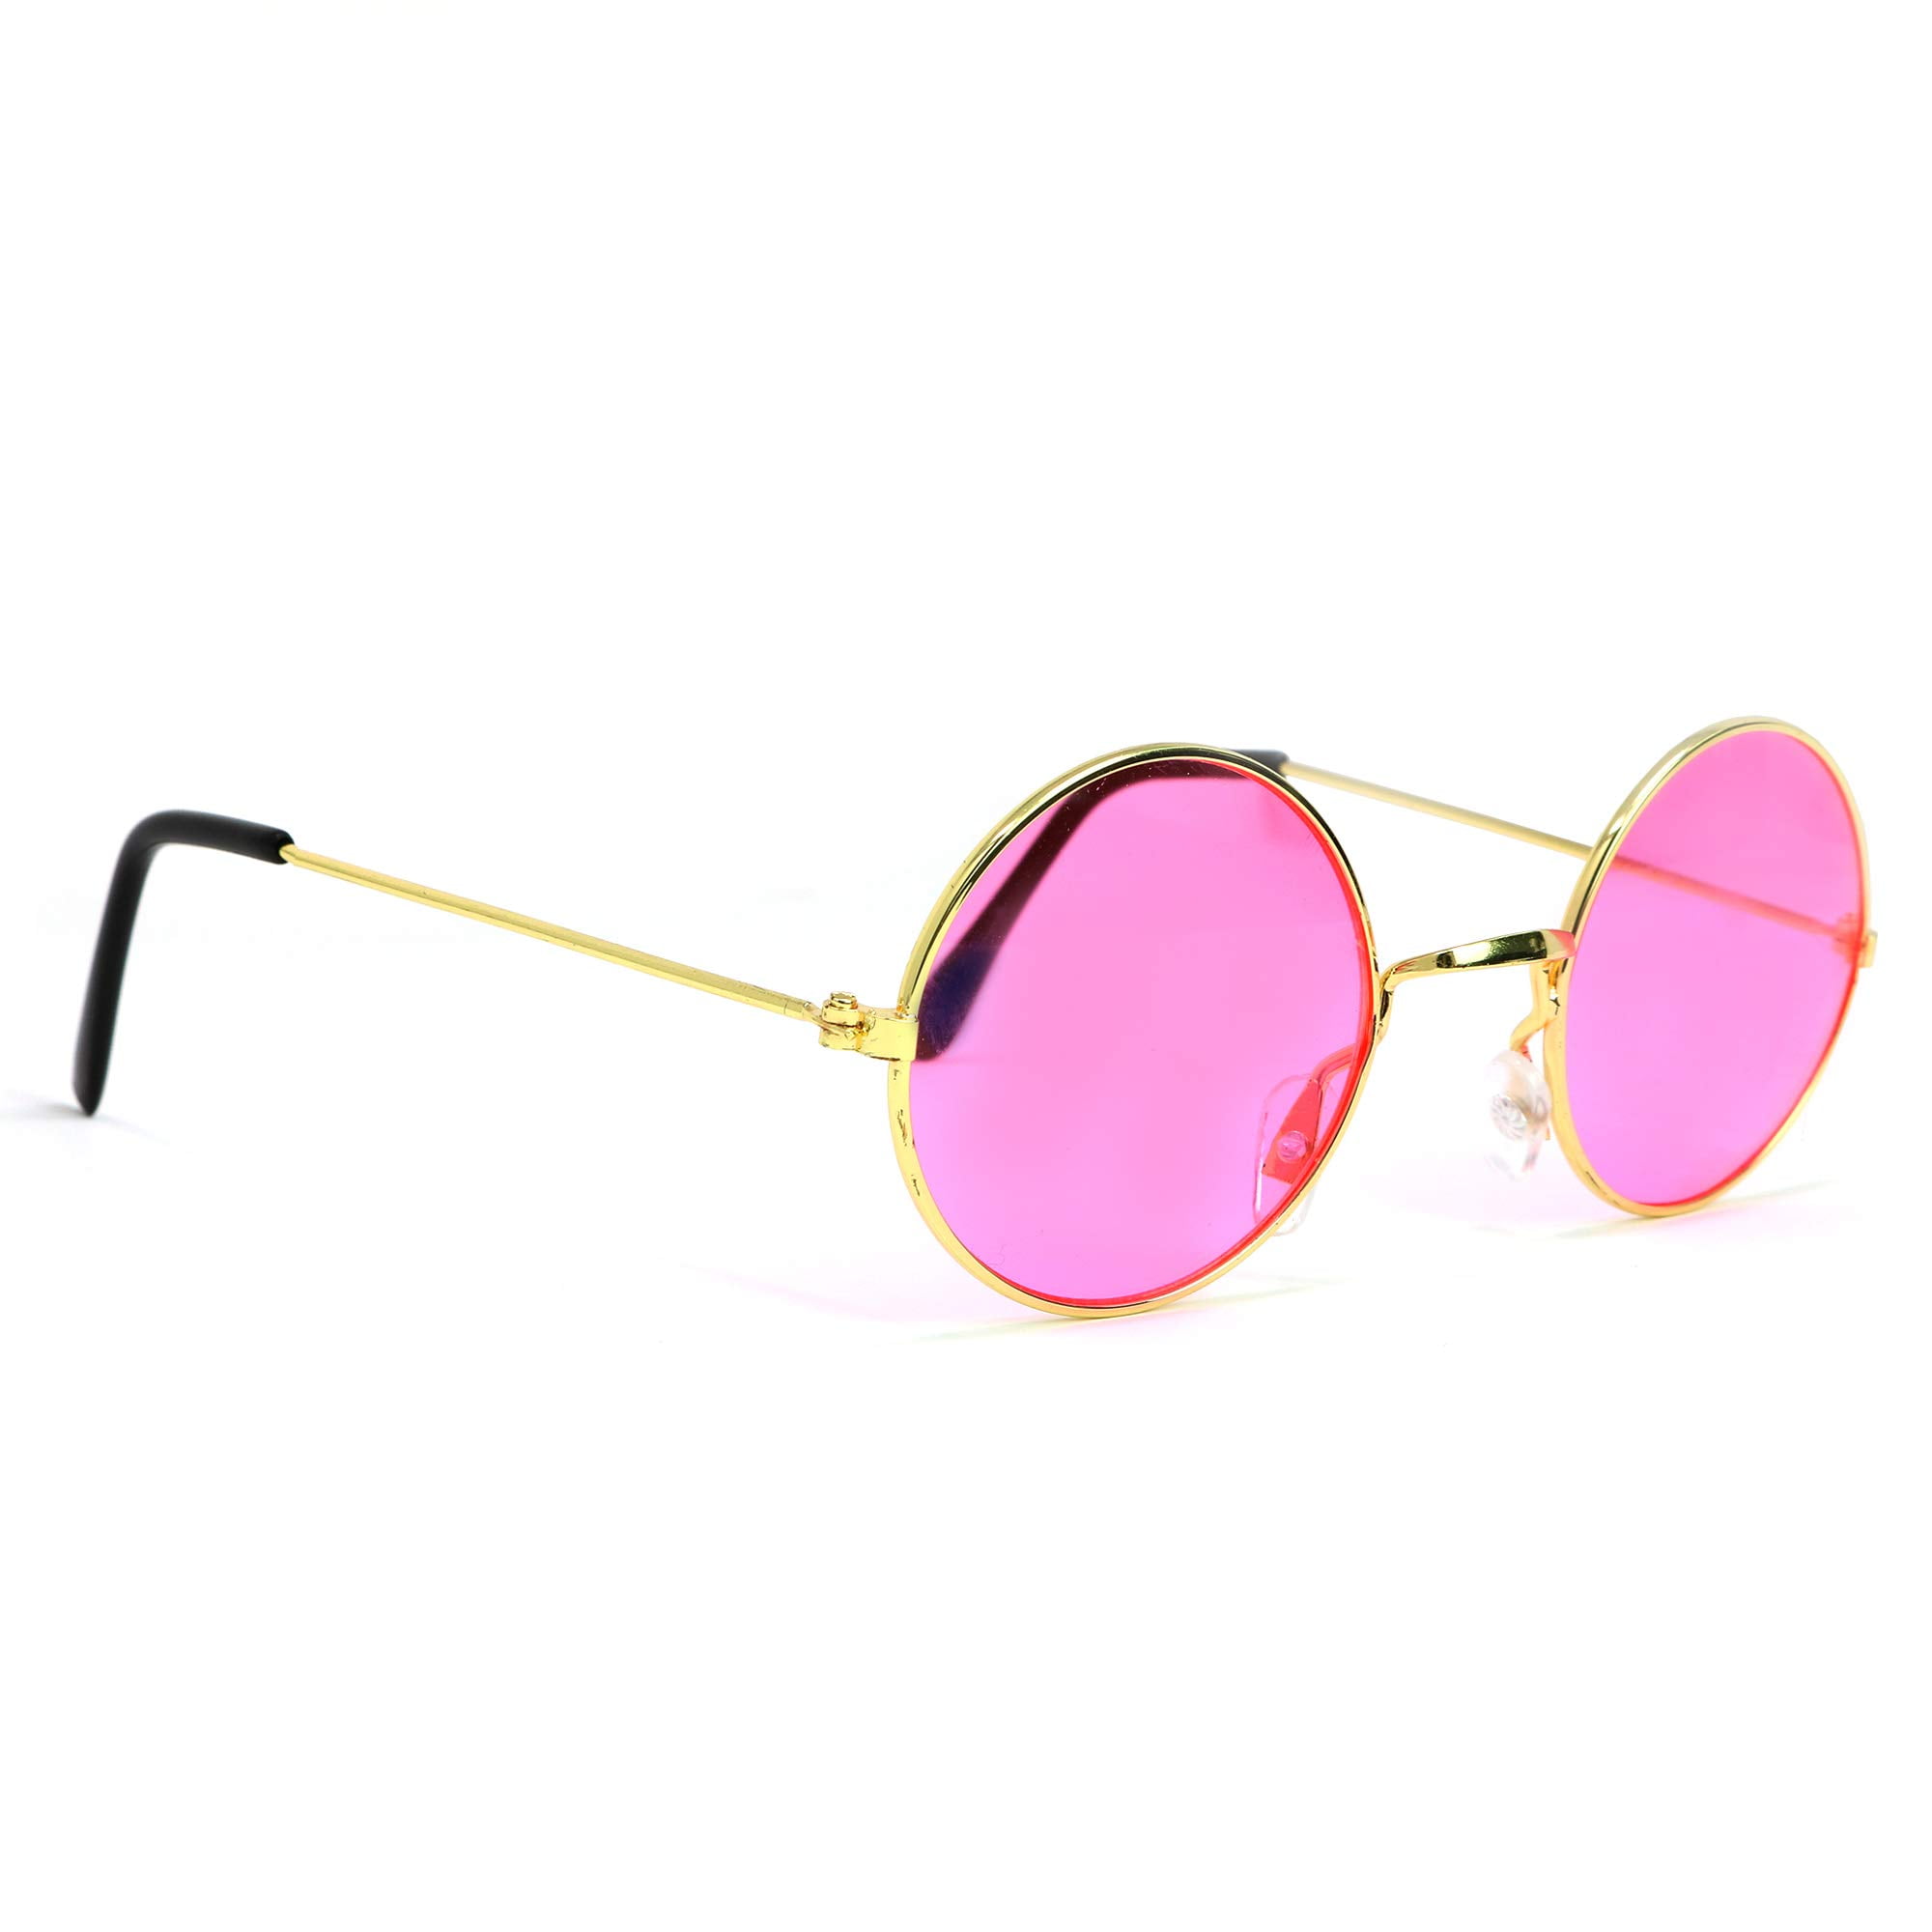 1960's Vintage Inspired Retro Round Frame Celebrity Brand Sunglasses 